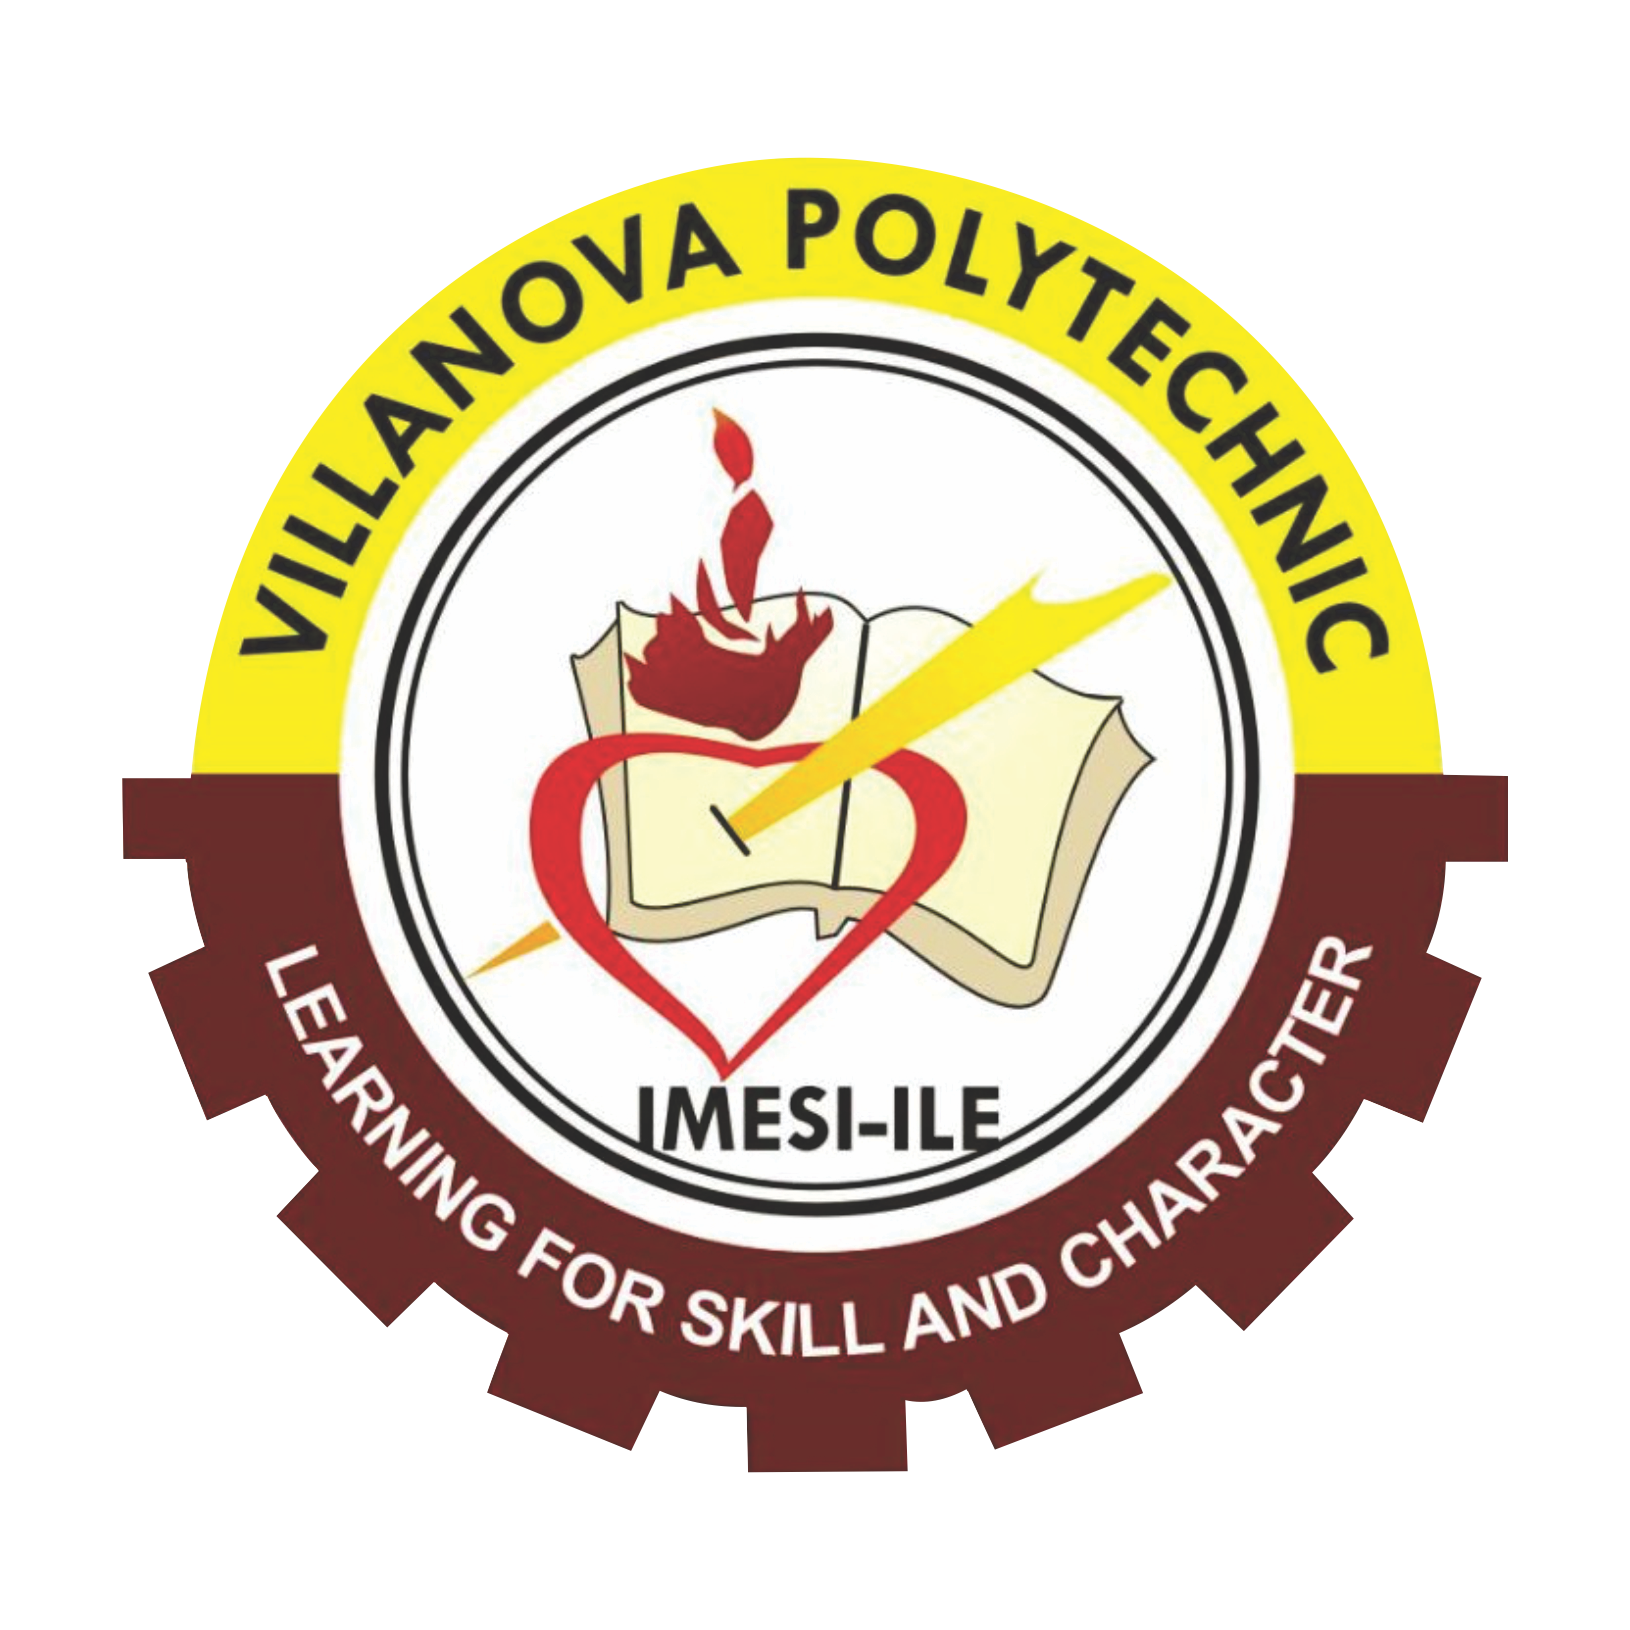 List of Courses Offered by Villanova Polytechnic